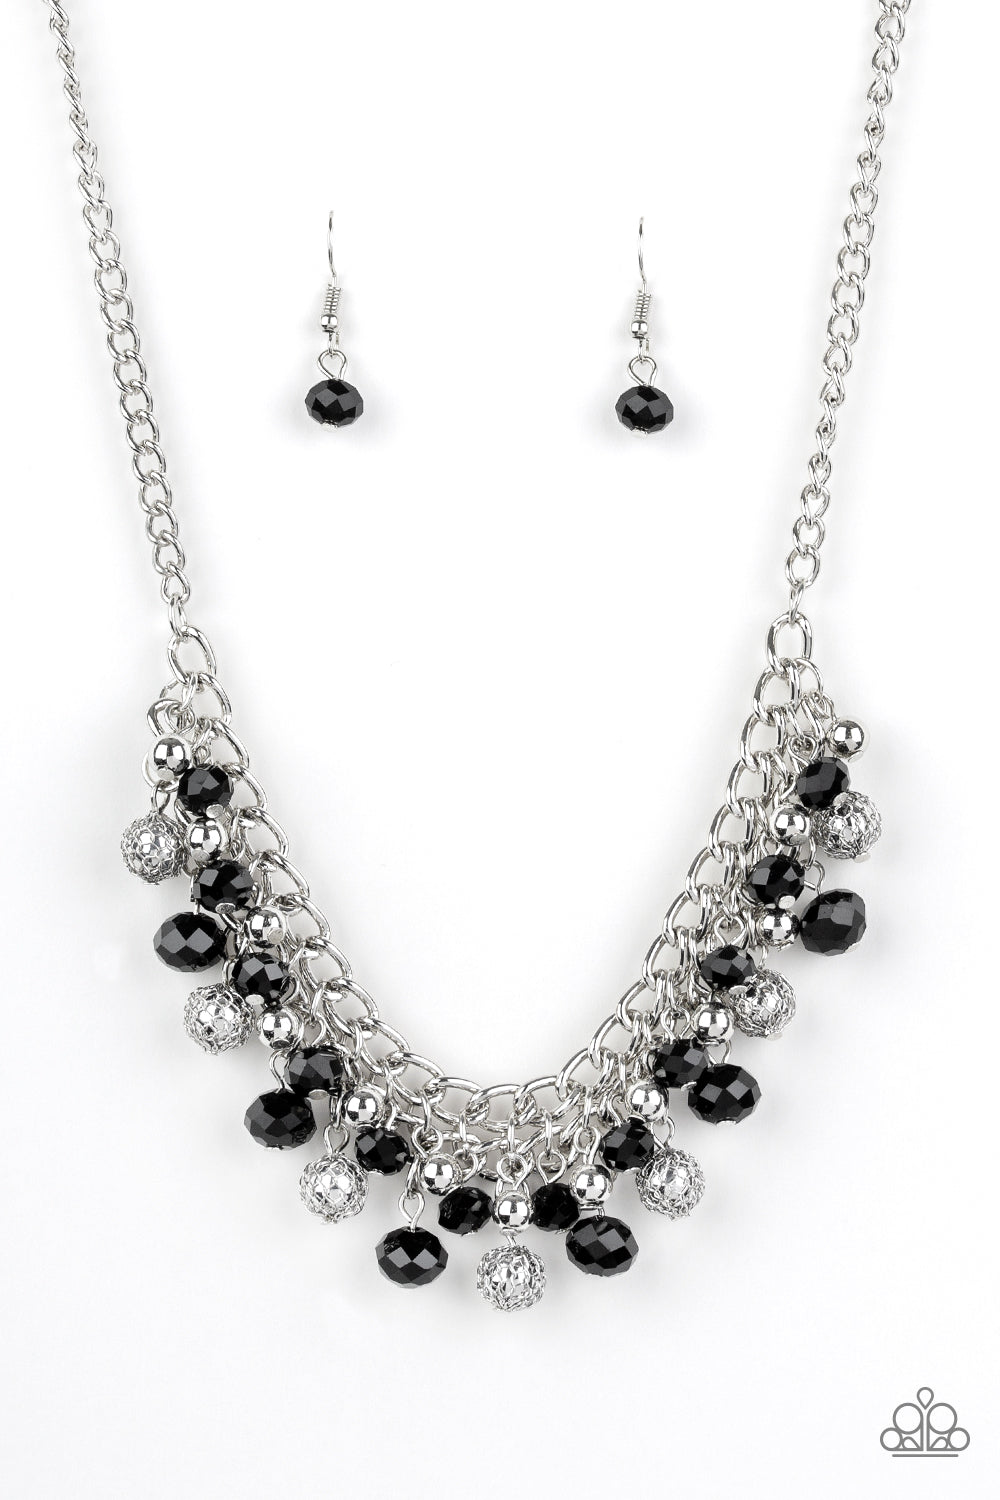 five-dollar-jewelry-party-spree-black-necklace-paparazzi-accessories